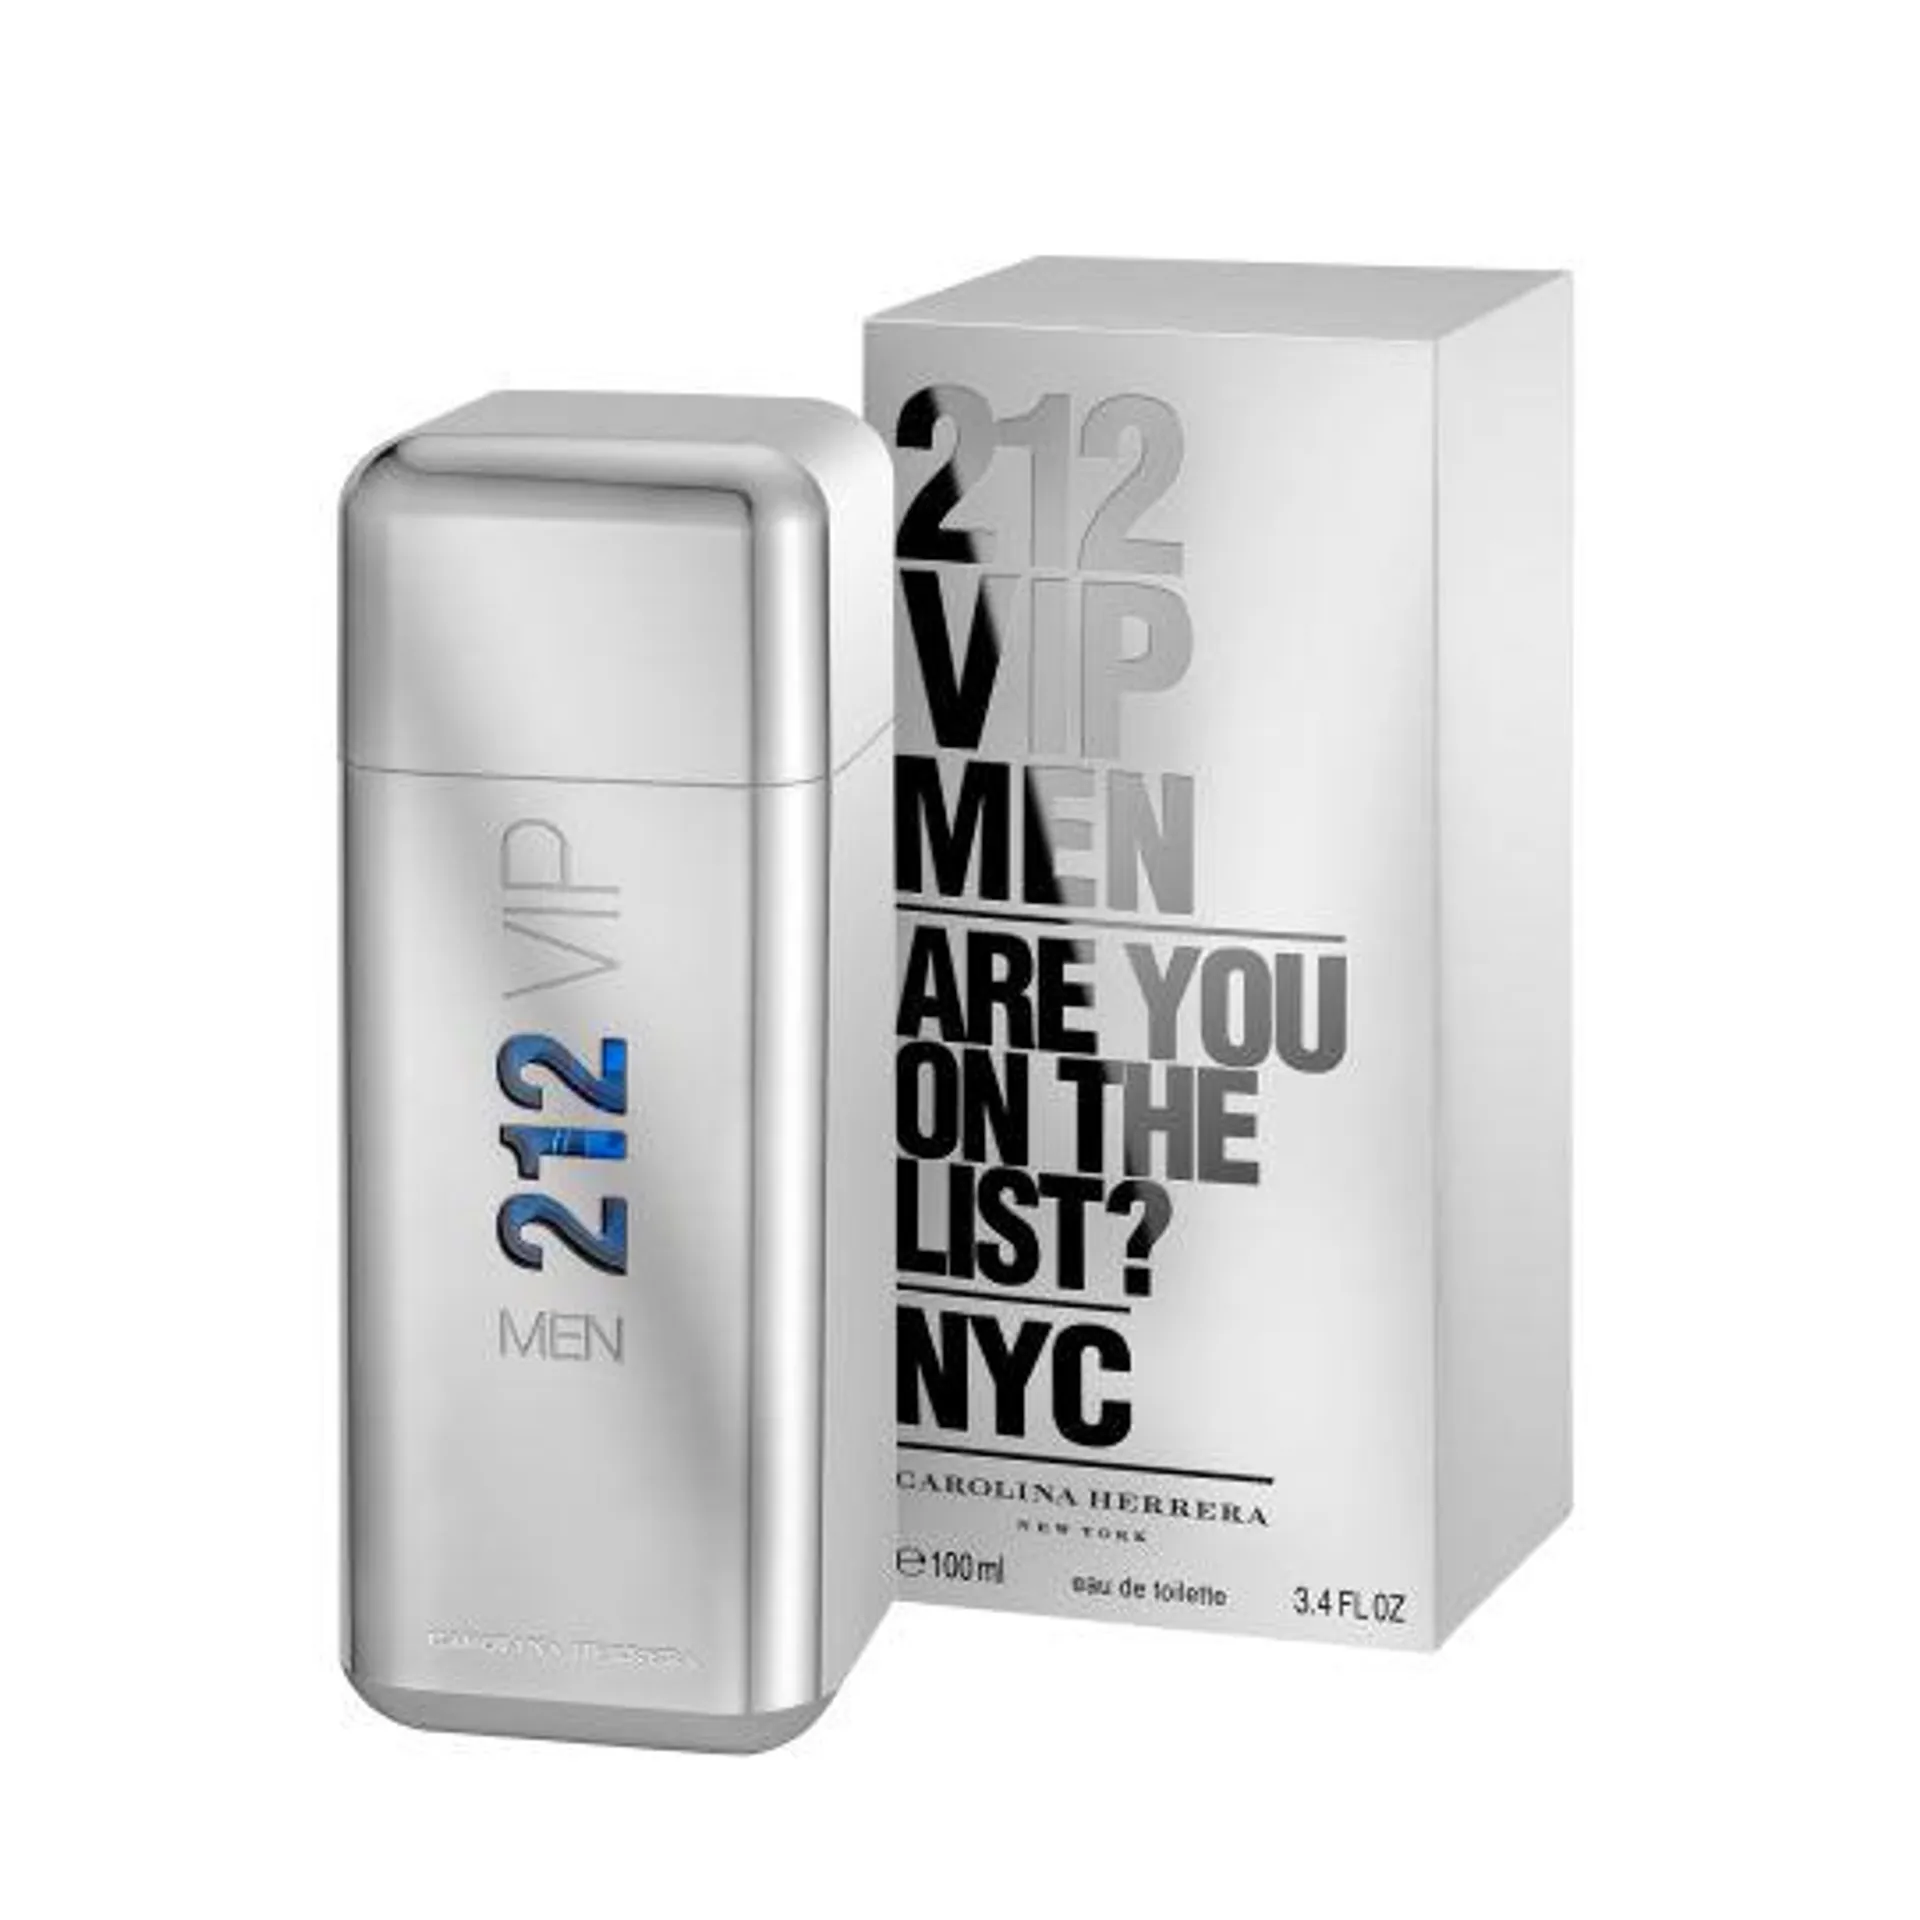 Perfume 212 Vip Men Masculino Eau de Toilette Spray